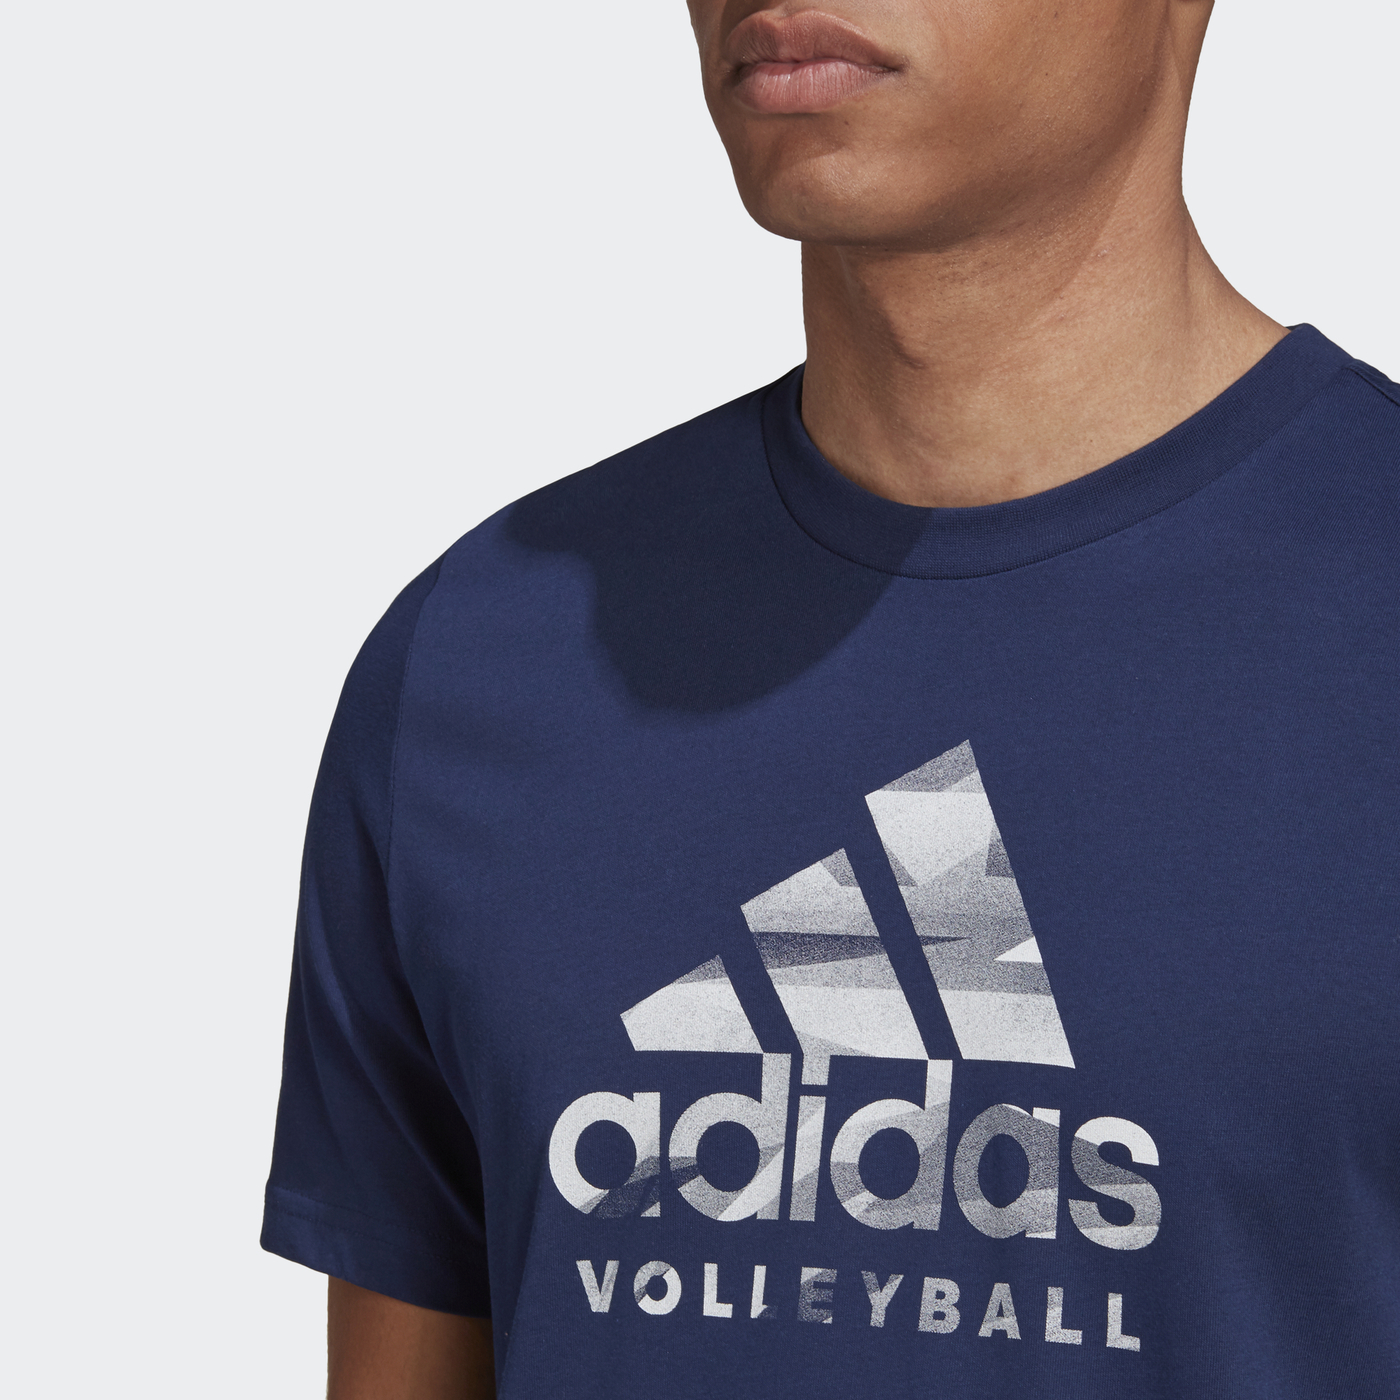 Майки вб. Adidas Volleyball футболка. Футболки с ВБ. Винтажные футболки адидас. Футболки с ВБ артикулы мужские.